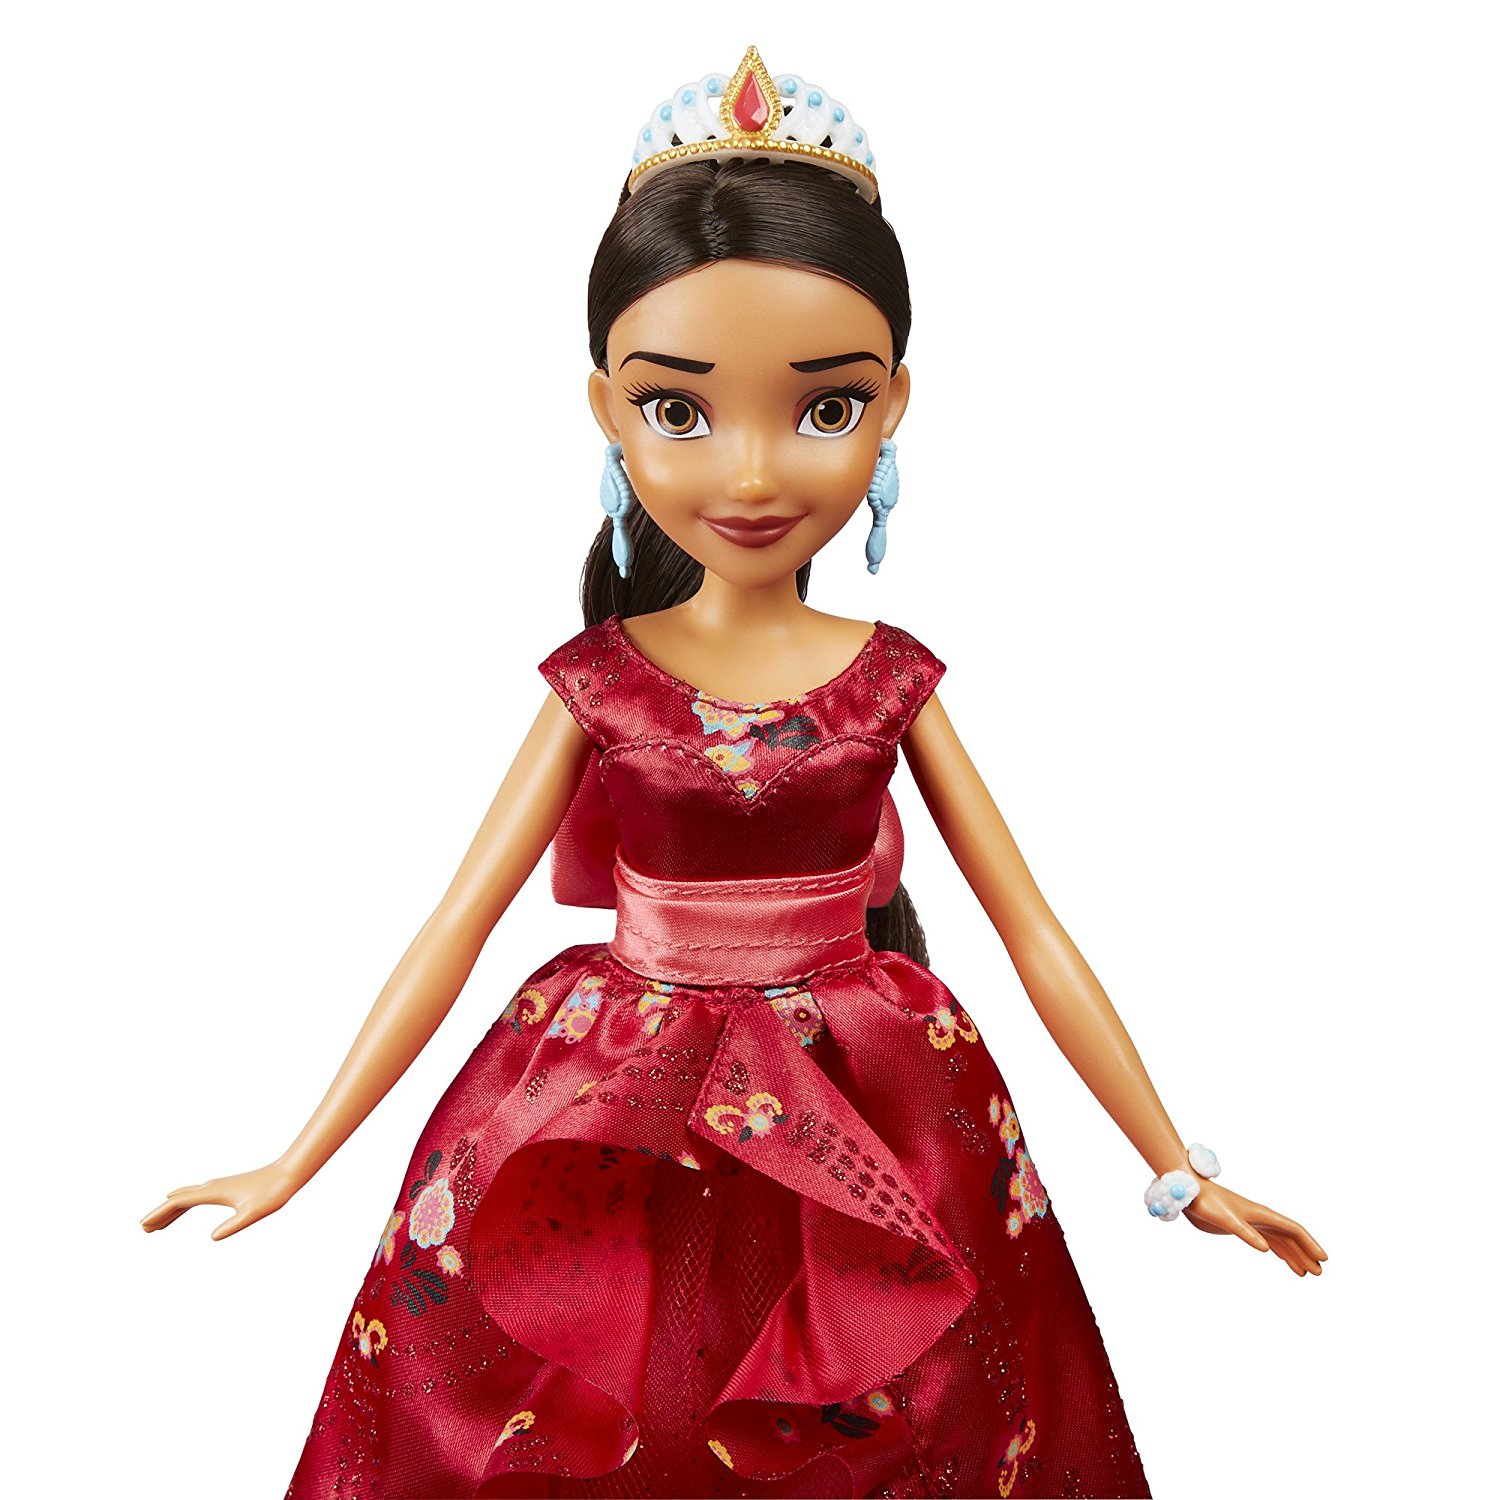 Amazon.com: Disney Elena of Avalor Royal Gown Doll: Toys & Games